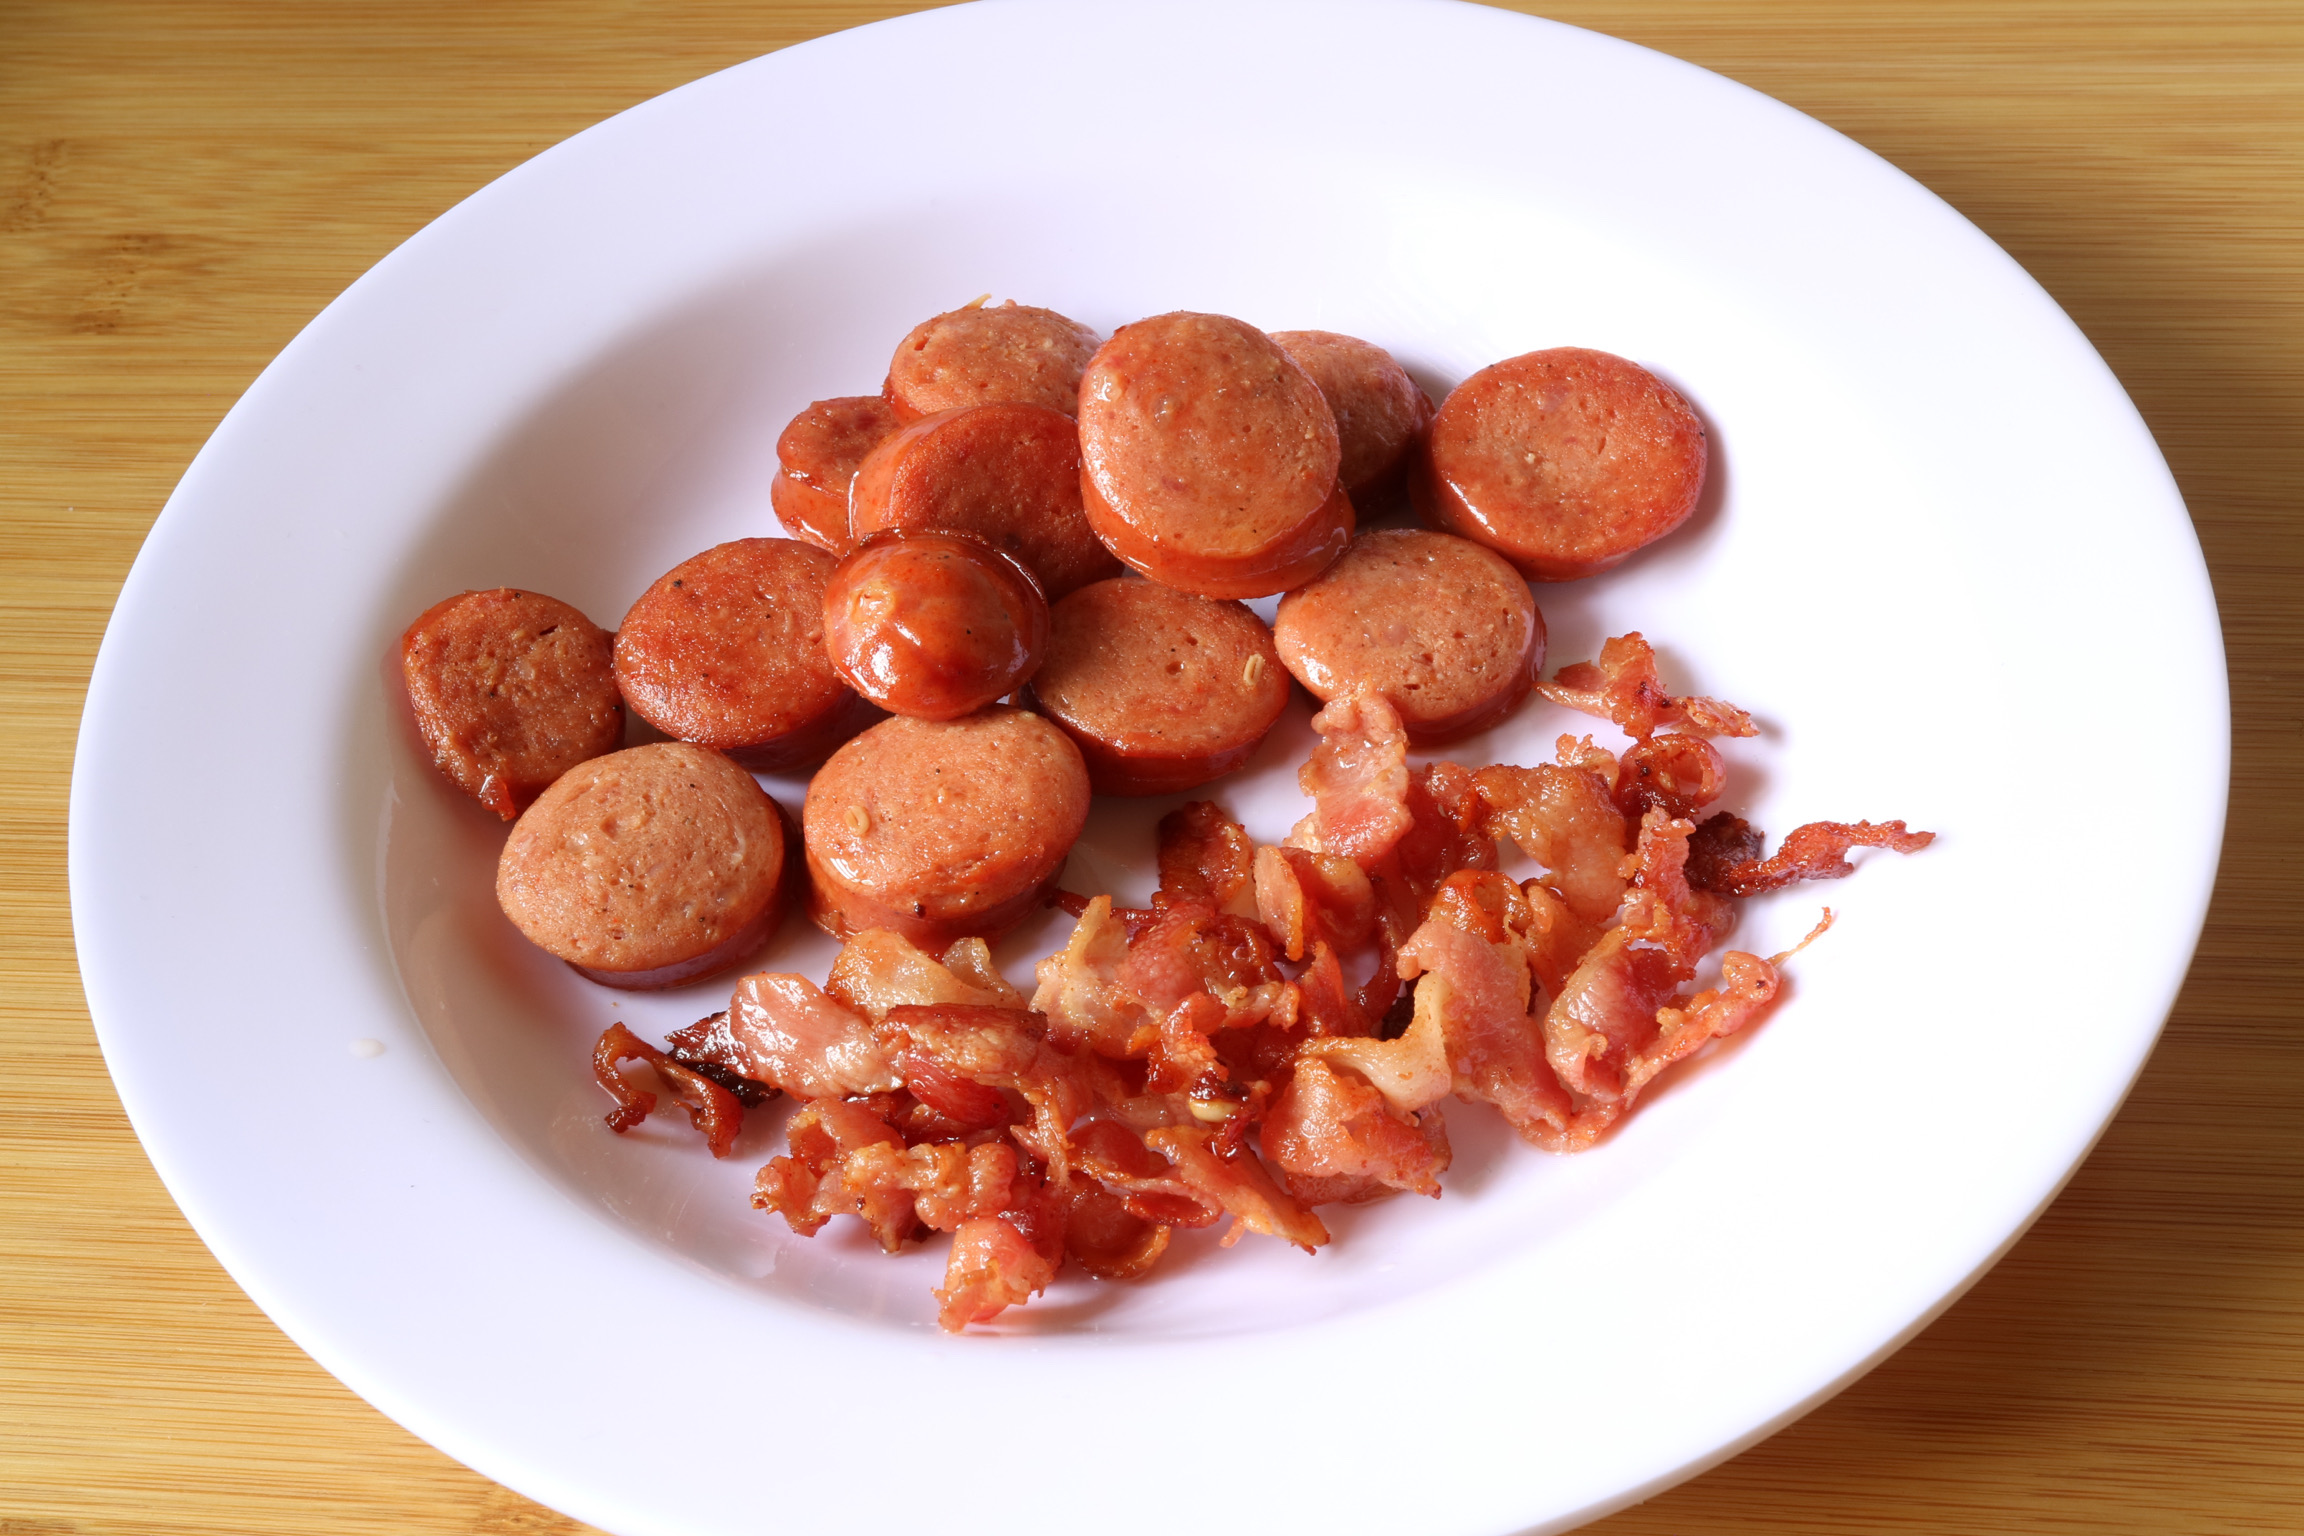 bacon and italian sausage cuts